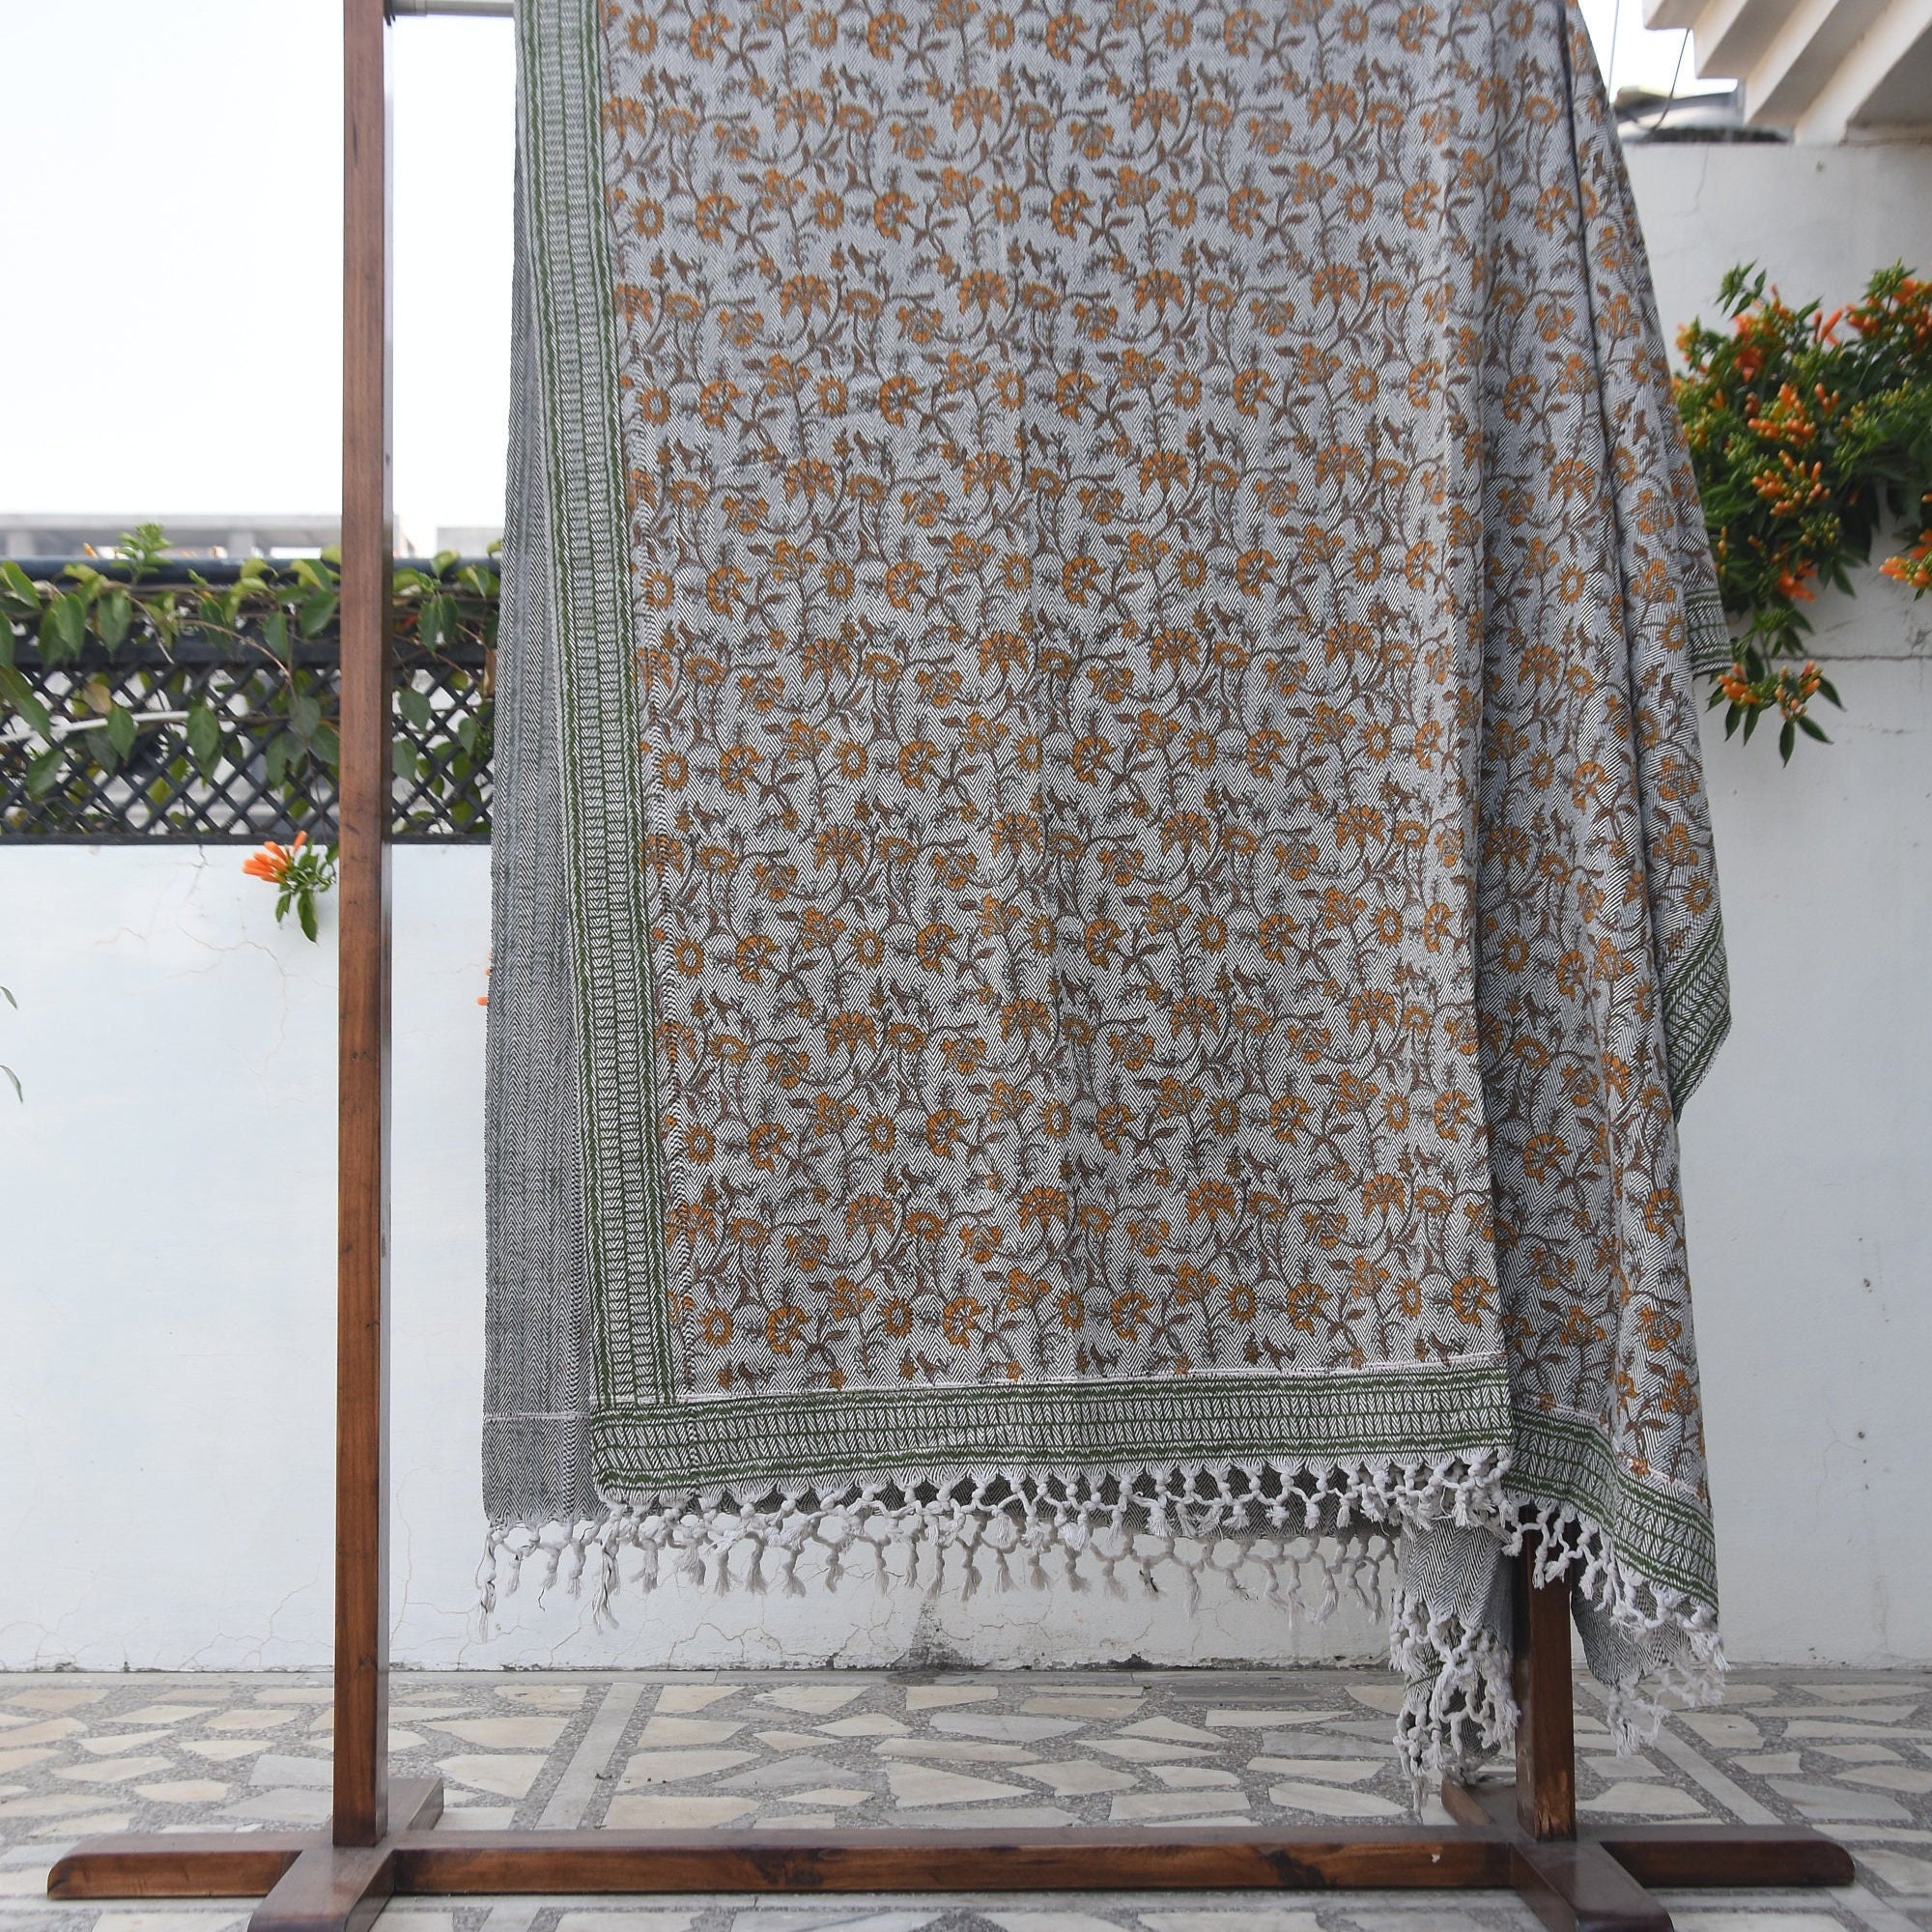 Handmade Blankets - Handwoven Block Print Throws - Blankets and Throws - Handwoven Handloom Fabric - NAAYAB